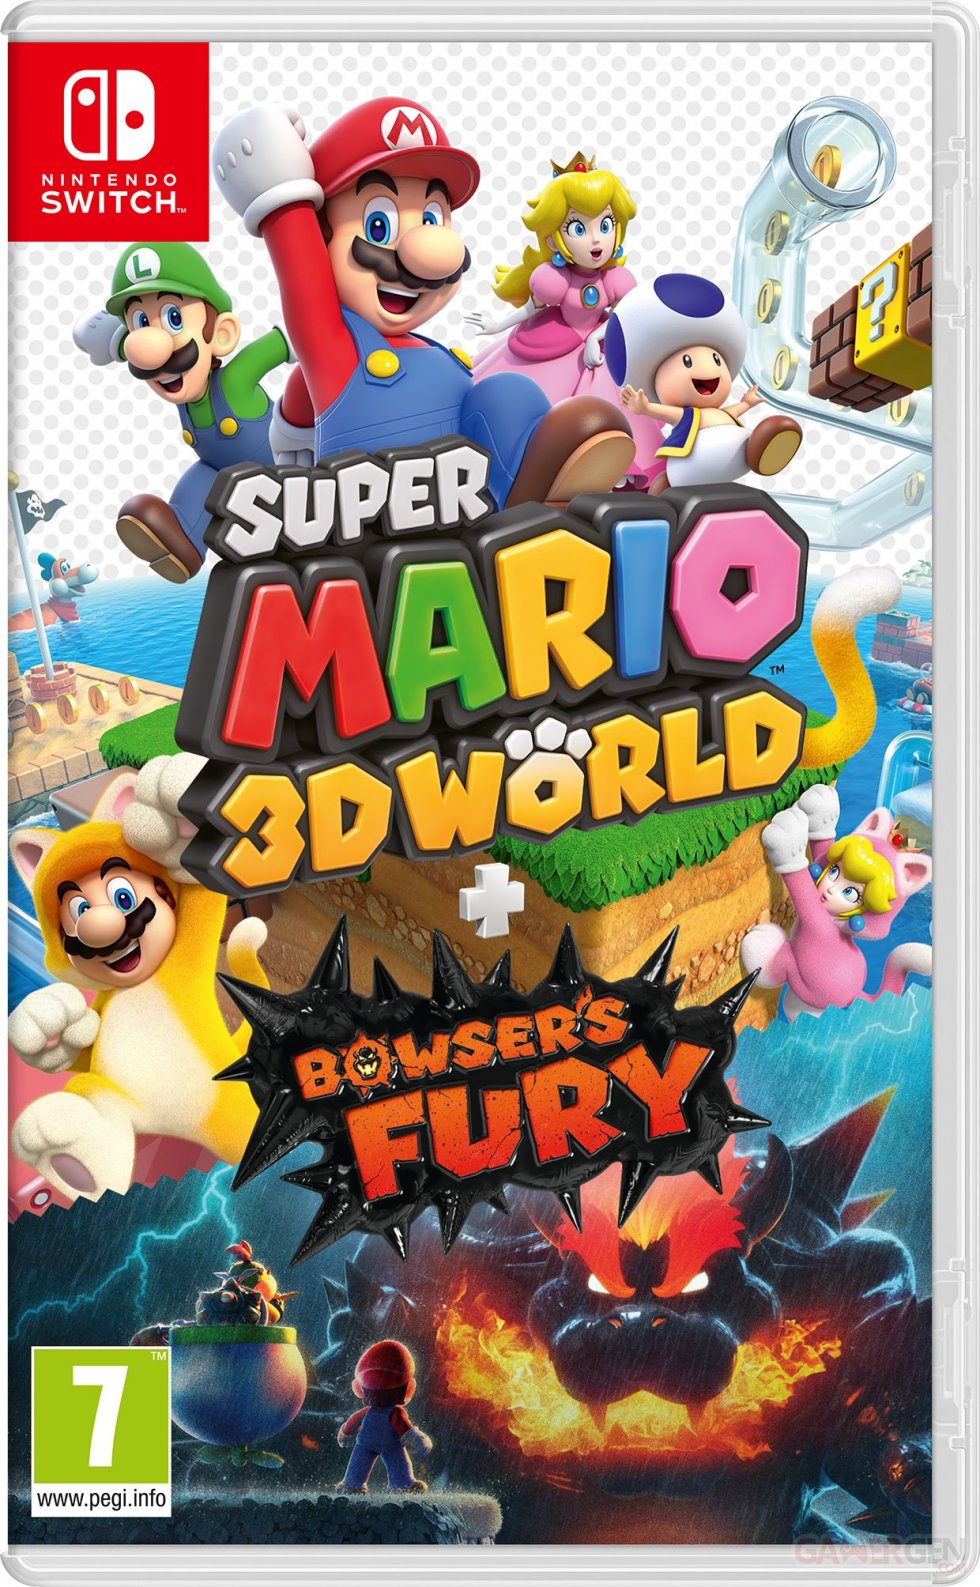 Super-Mario-3D-World-Bowsers-Fury-jaquette-finale-12-01-2021